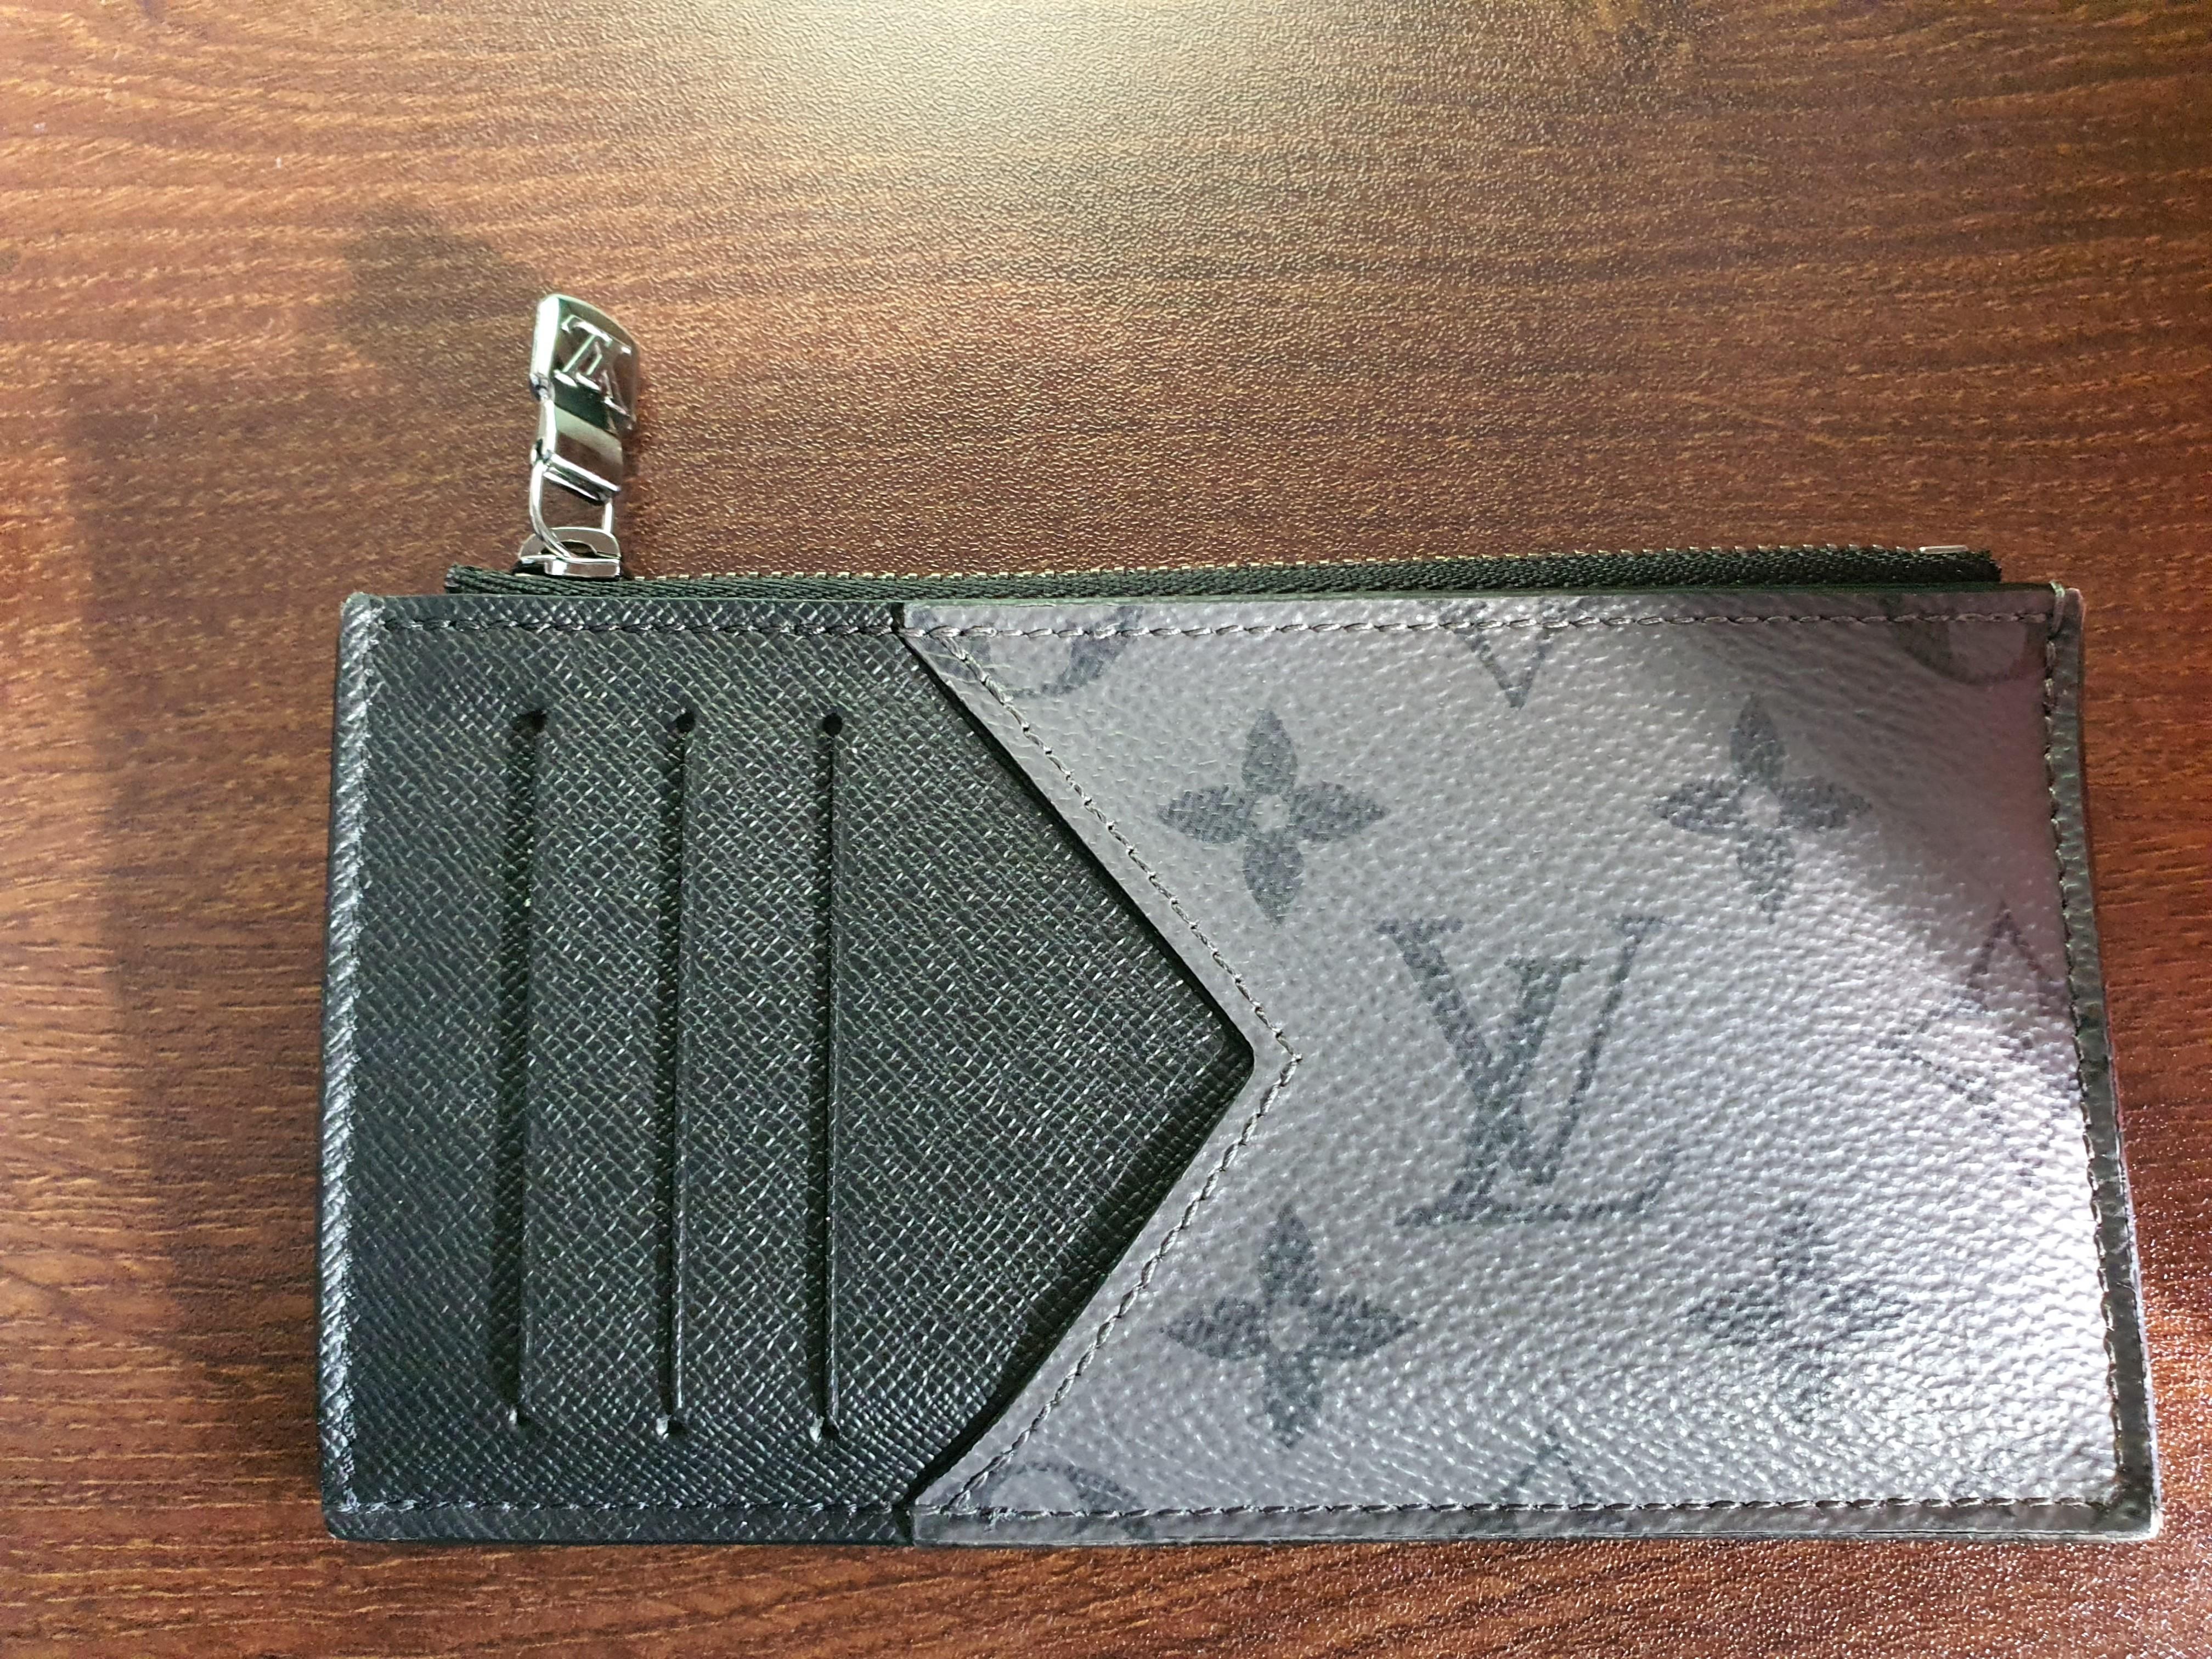 Louis Vuitton Coin Card Holder Wallet Review 